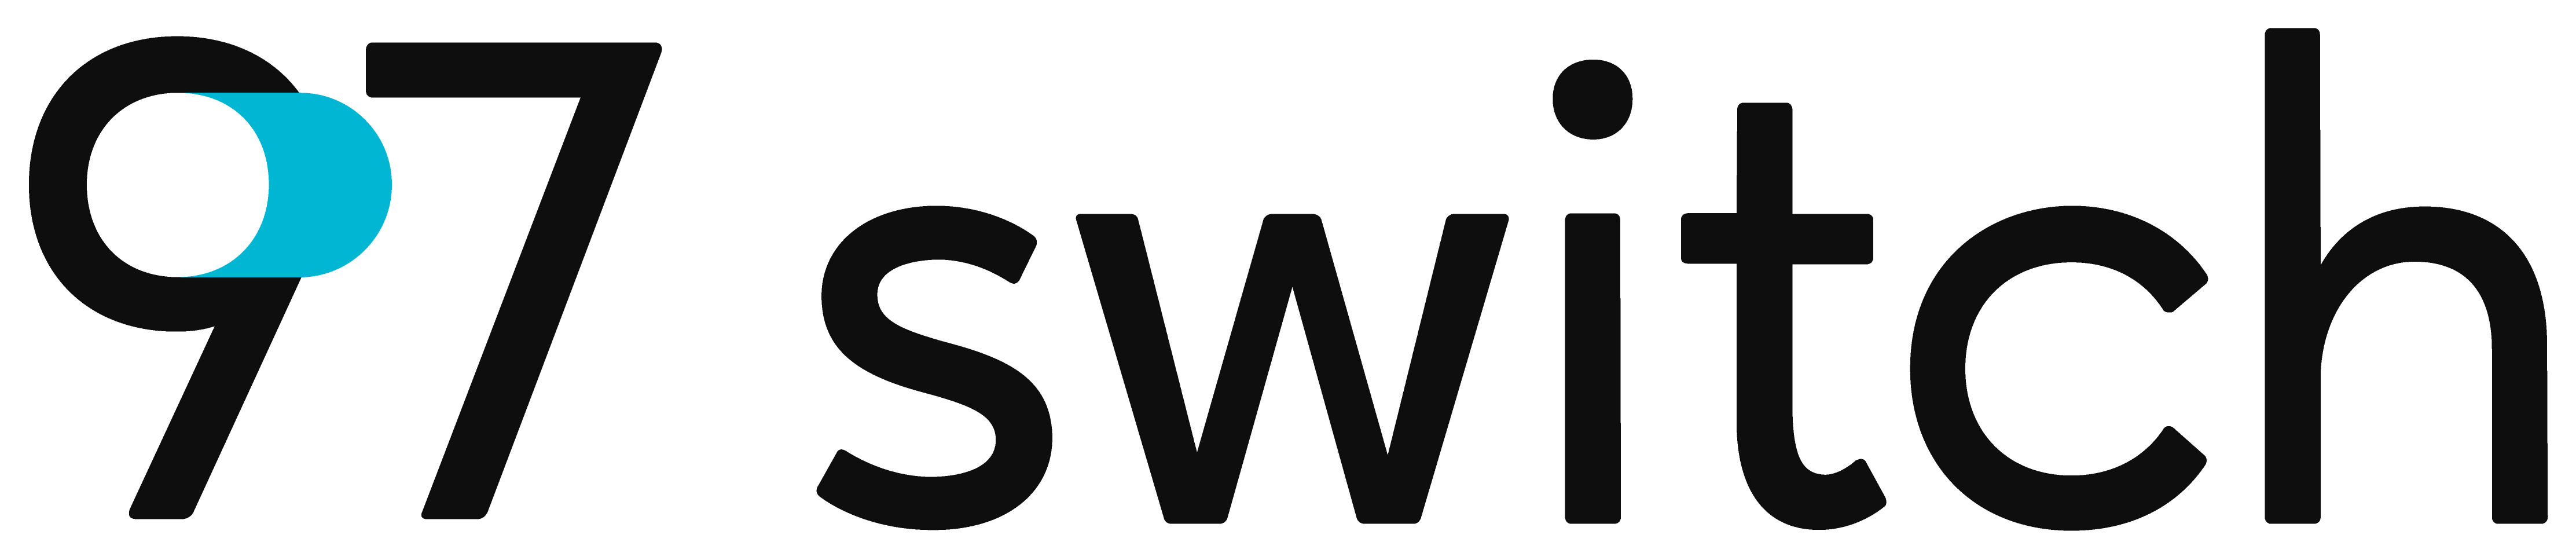 Best BigCommerce Design Business Logo: 97 Switch